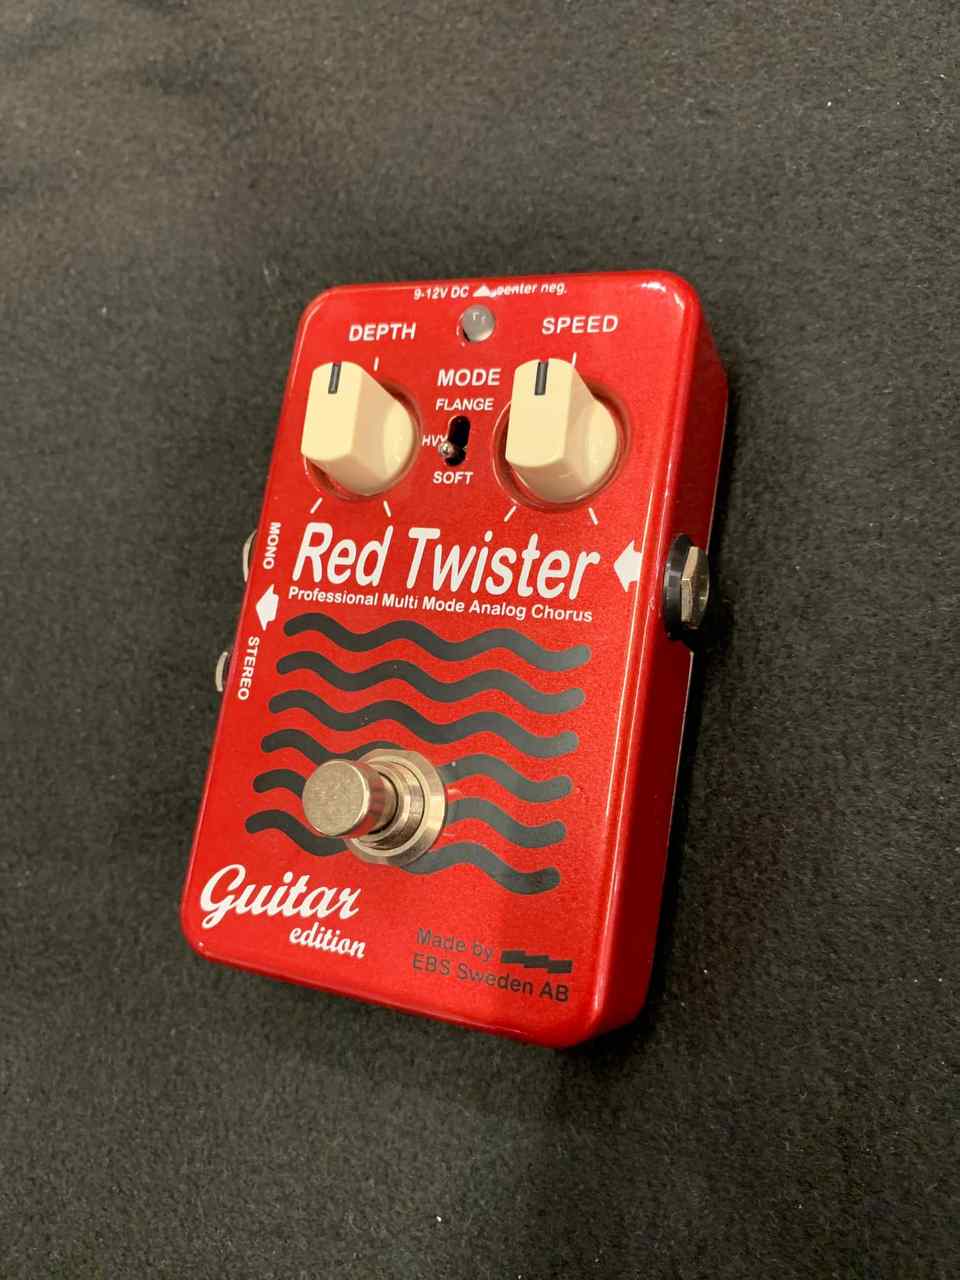 EBS Red Twister Professional Multi Mode Analog Chorus Guitar ...